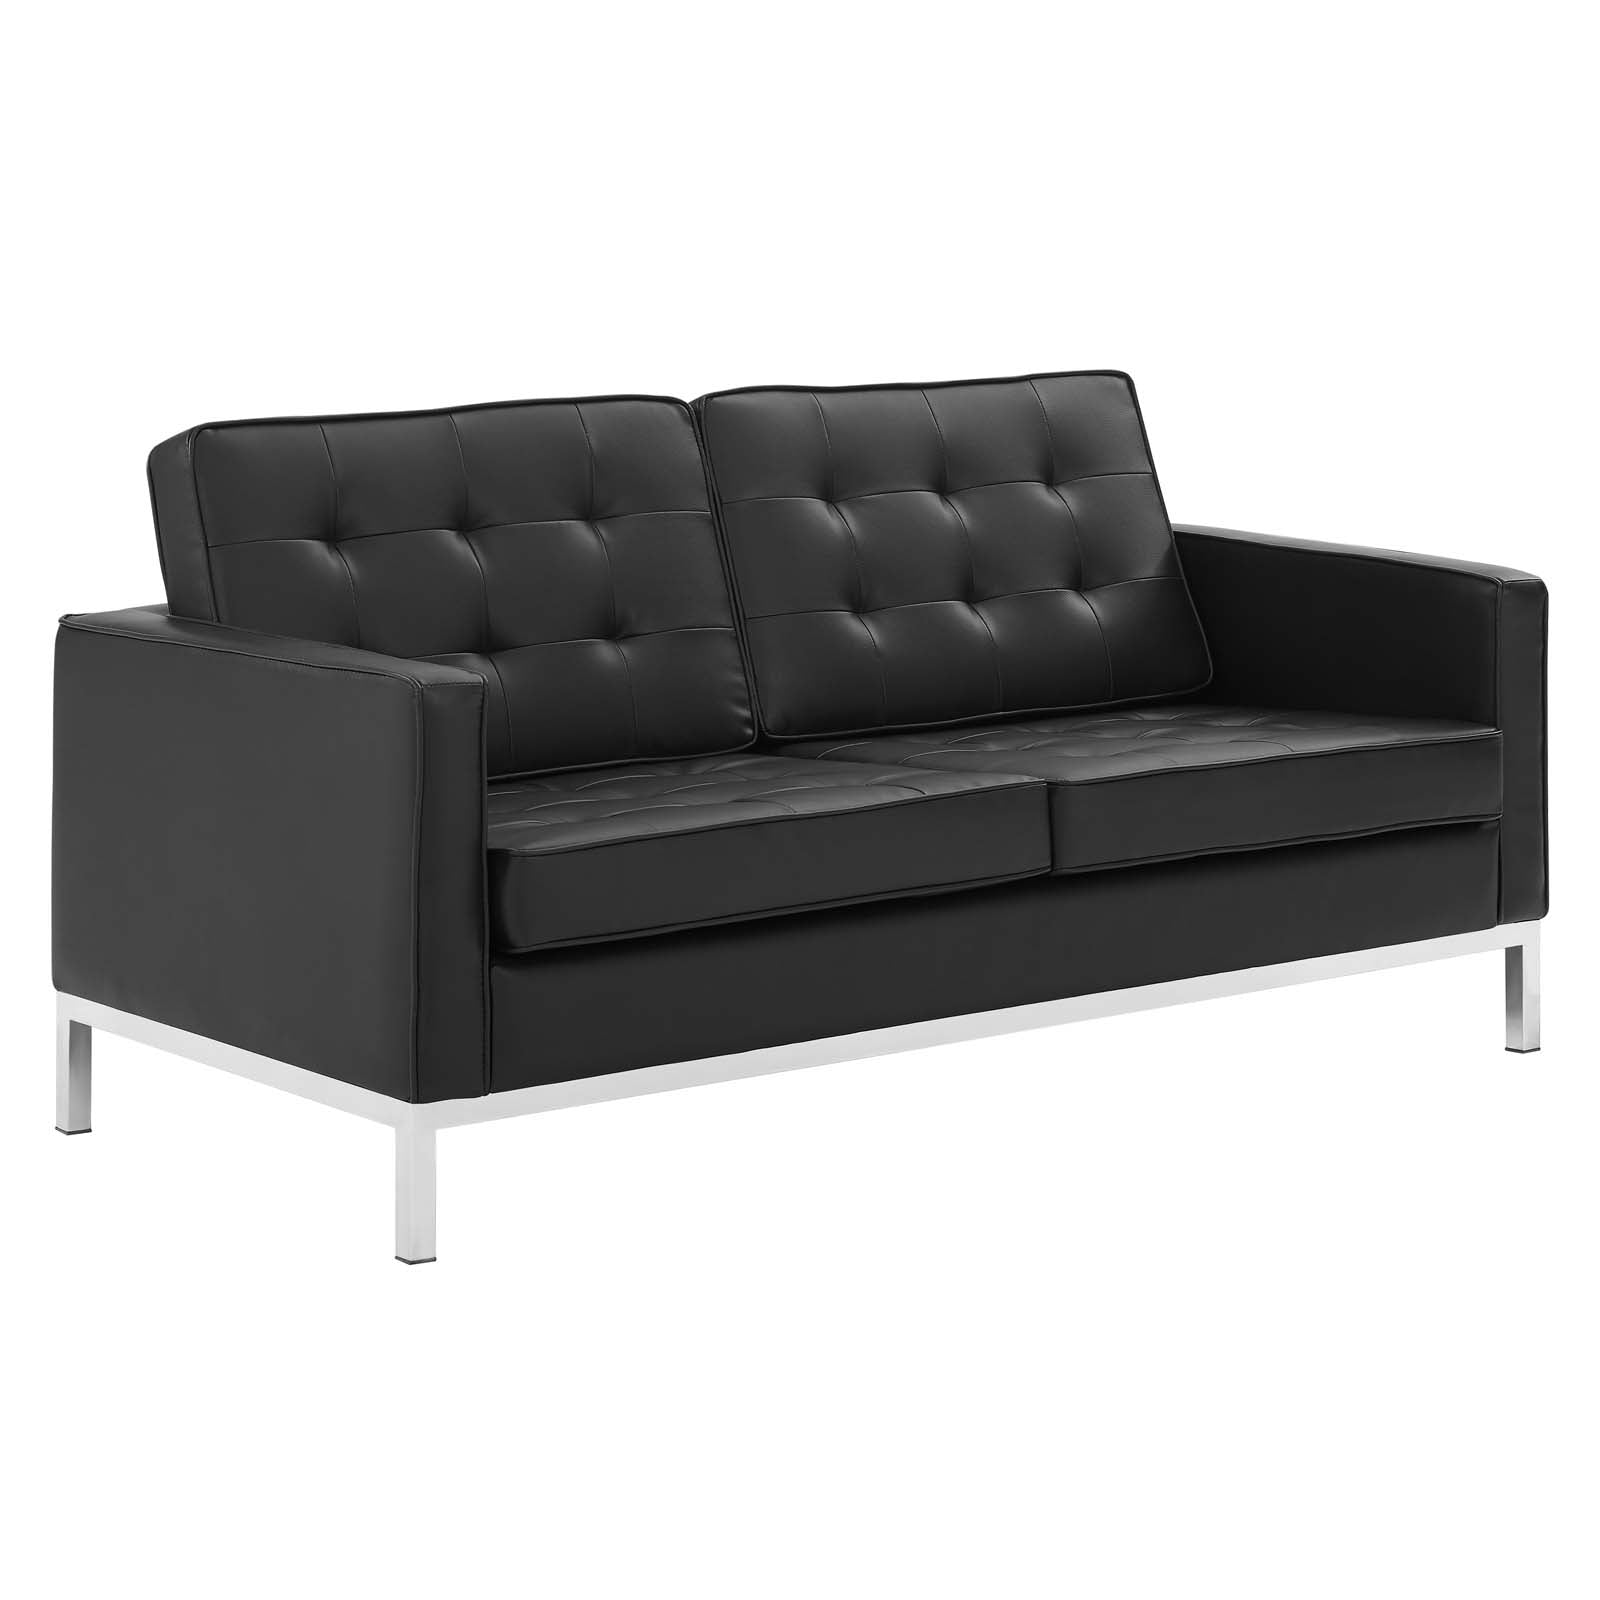 Modway Living Room Sets - Loft-Tufted-Upholstered-Faux-Leather-3-Piece-Set-Silver-Black